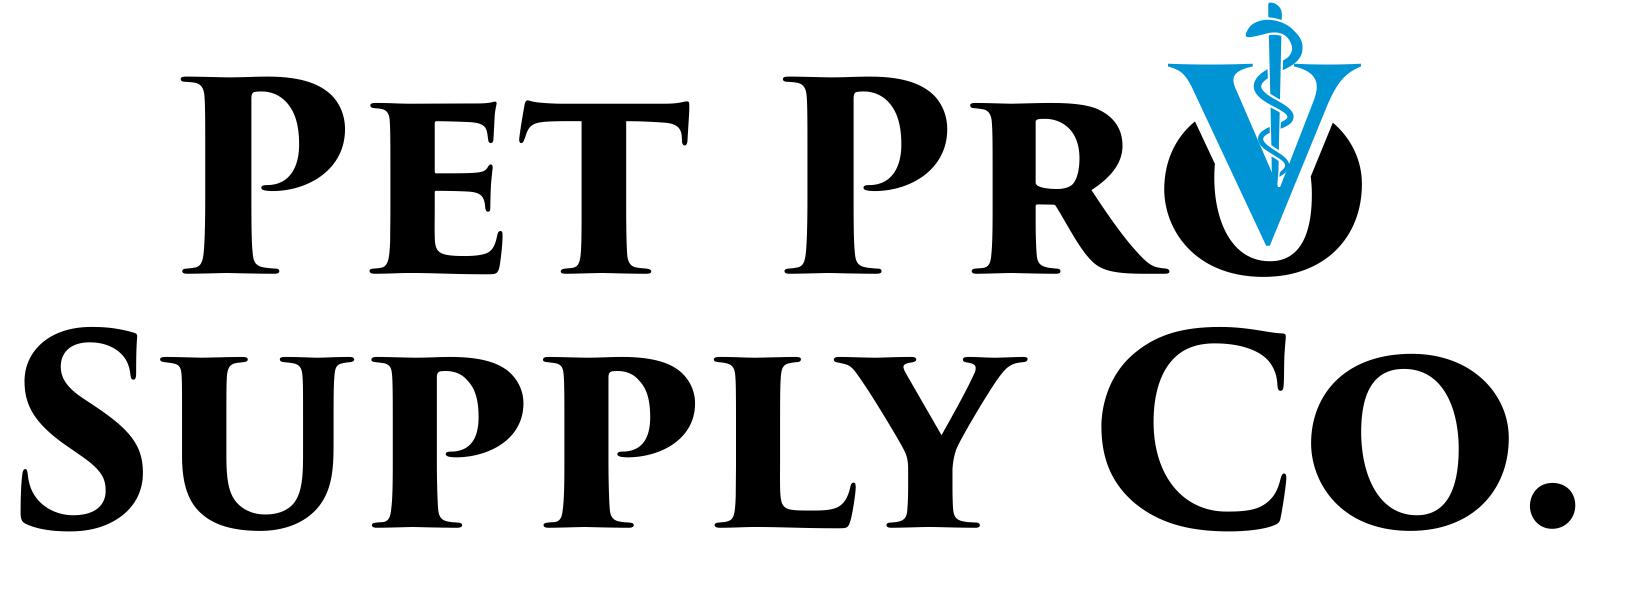 Pet Pro Supply Co. logo